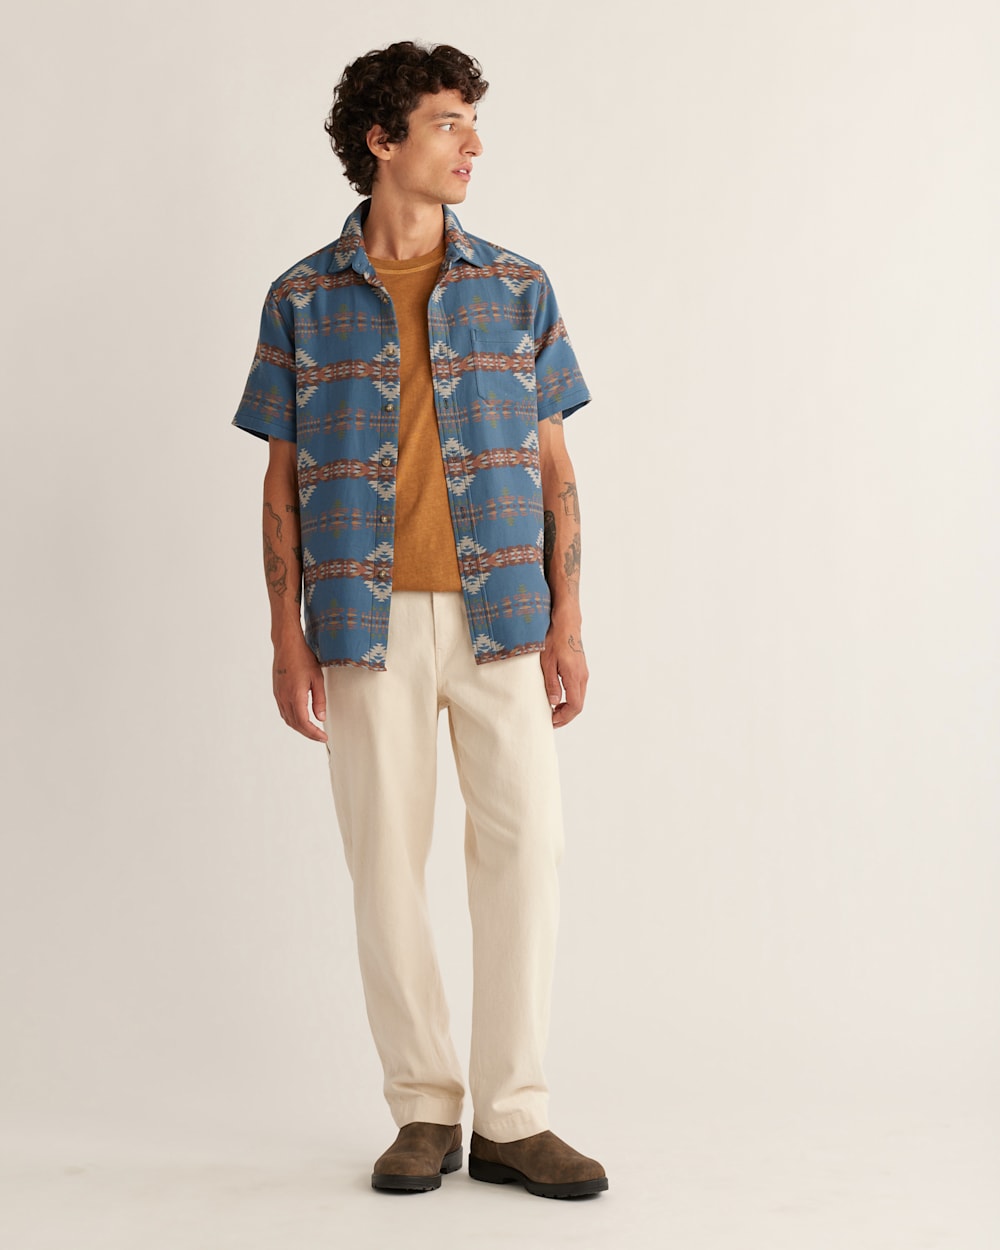 Shop Men's Short-Sleeve Gateway Cotton Shirt | Pendleton